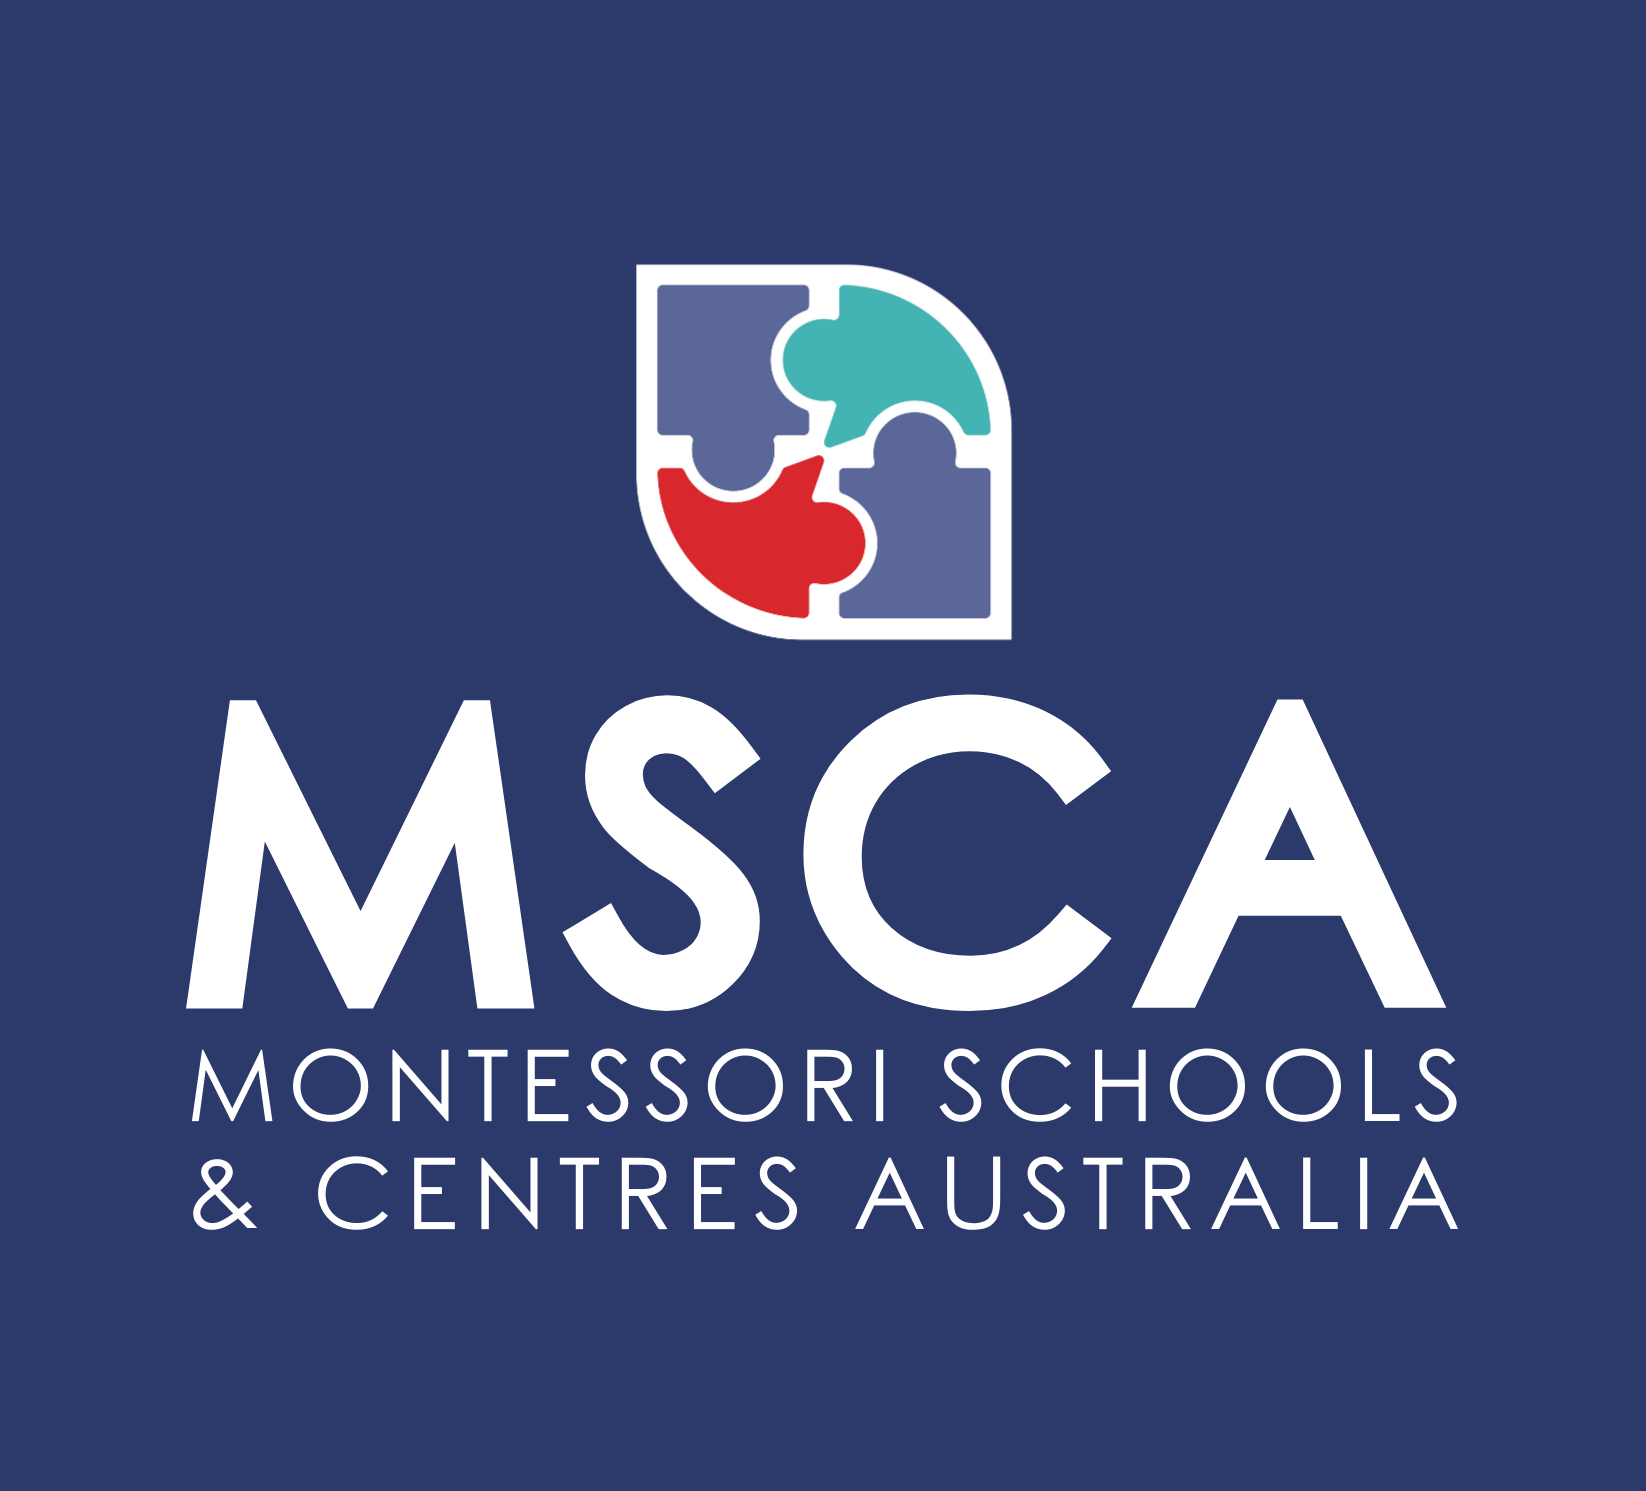 MSCA logo on a blue background